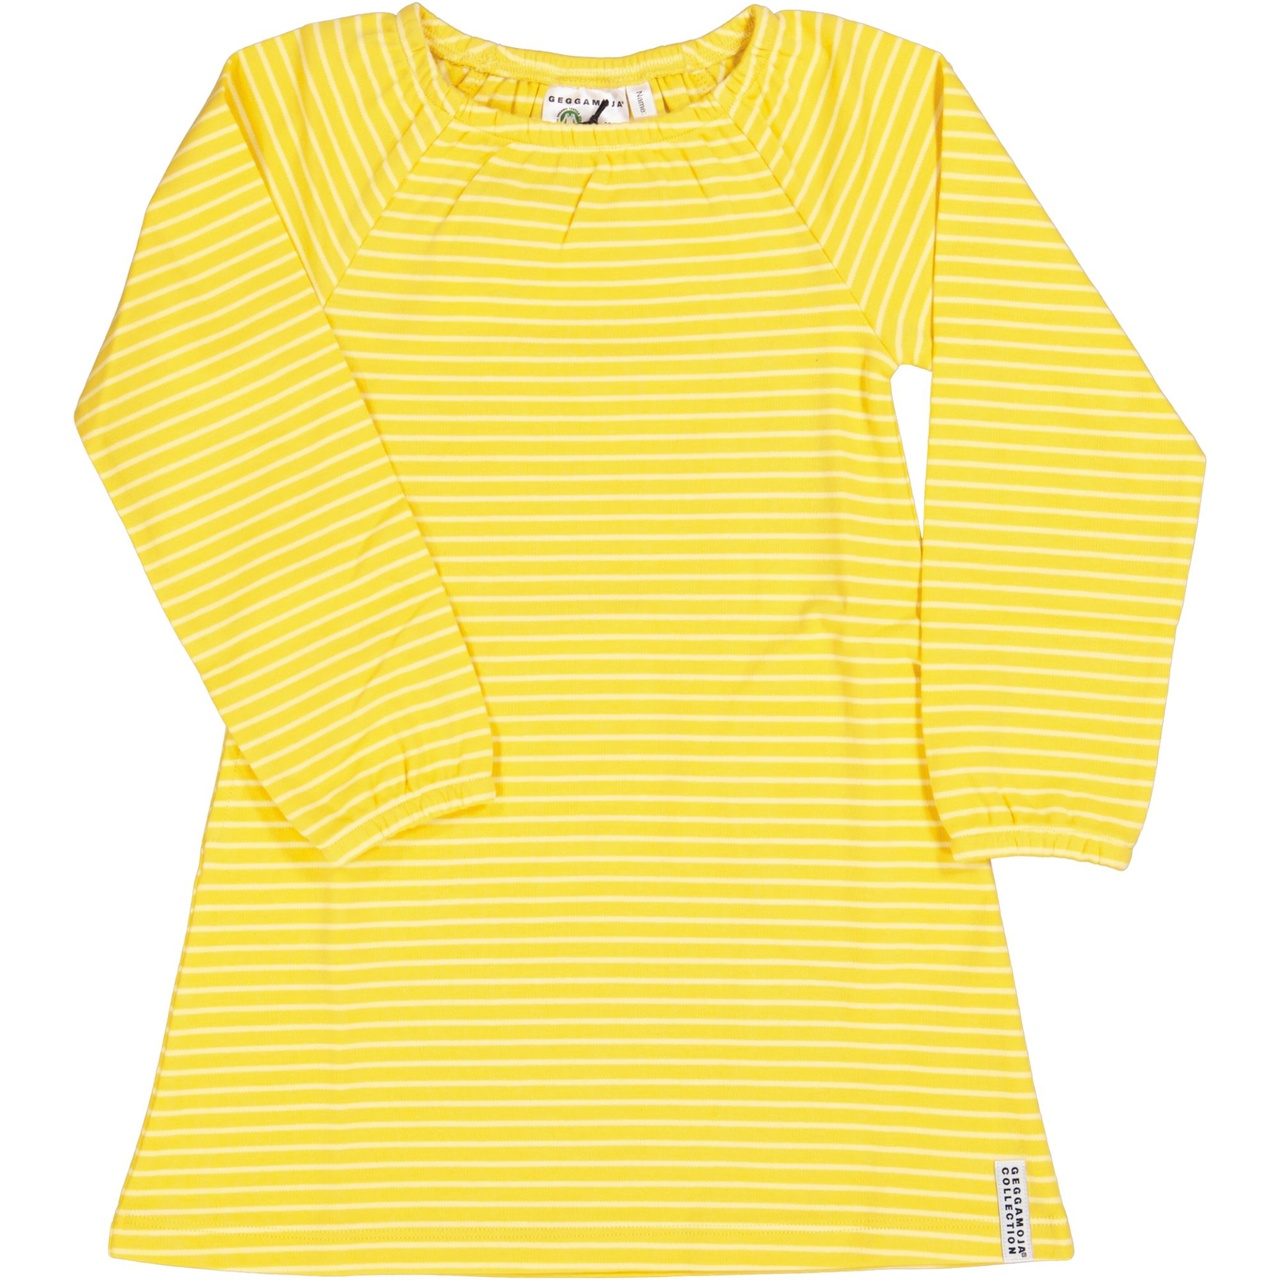 Singoalla dress D.yellow/yellow 110/116